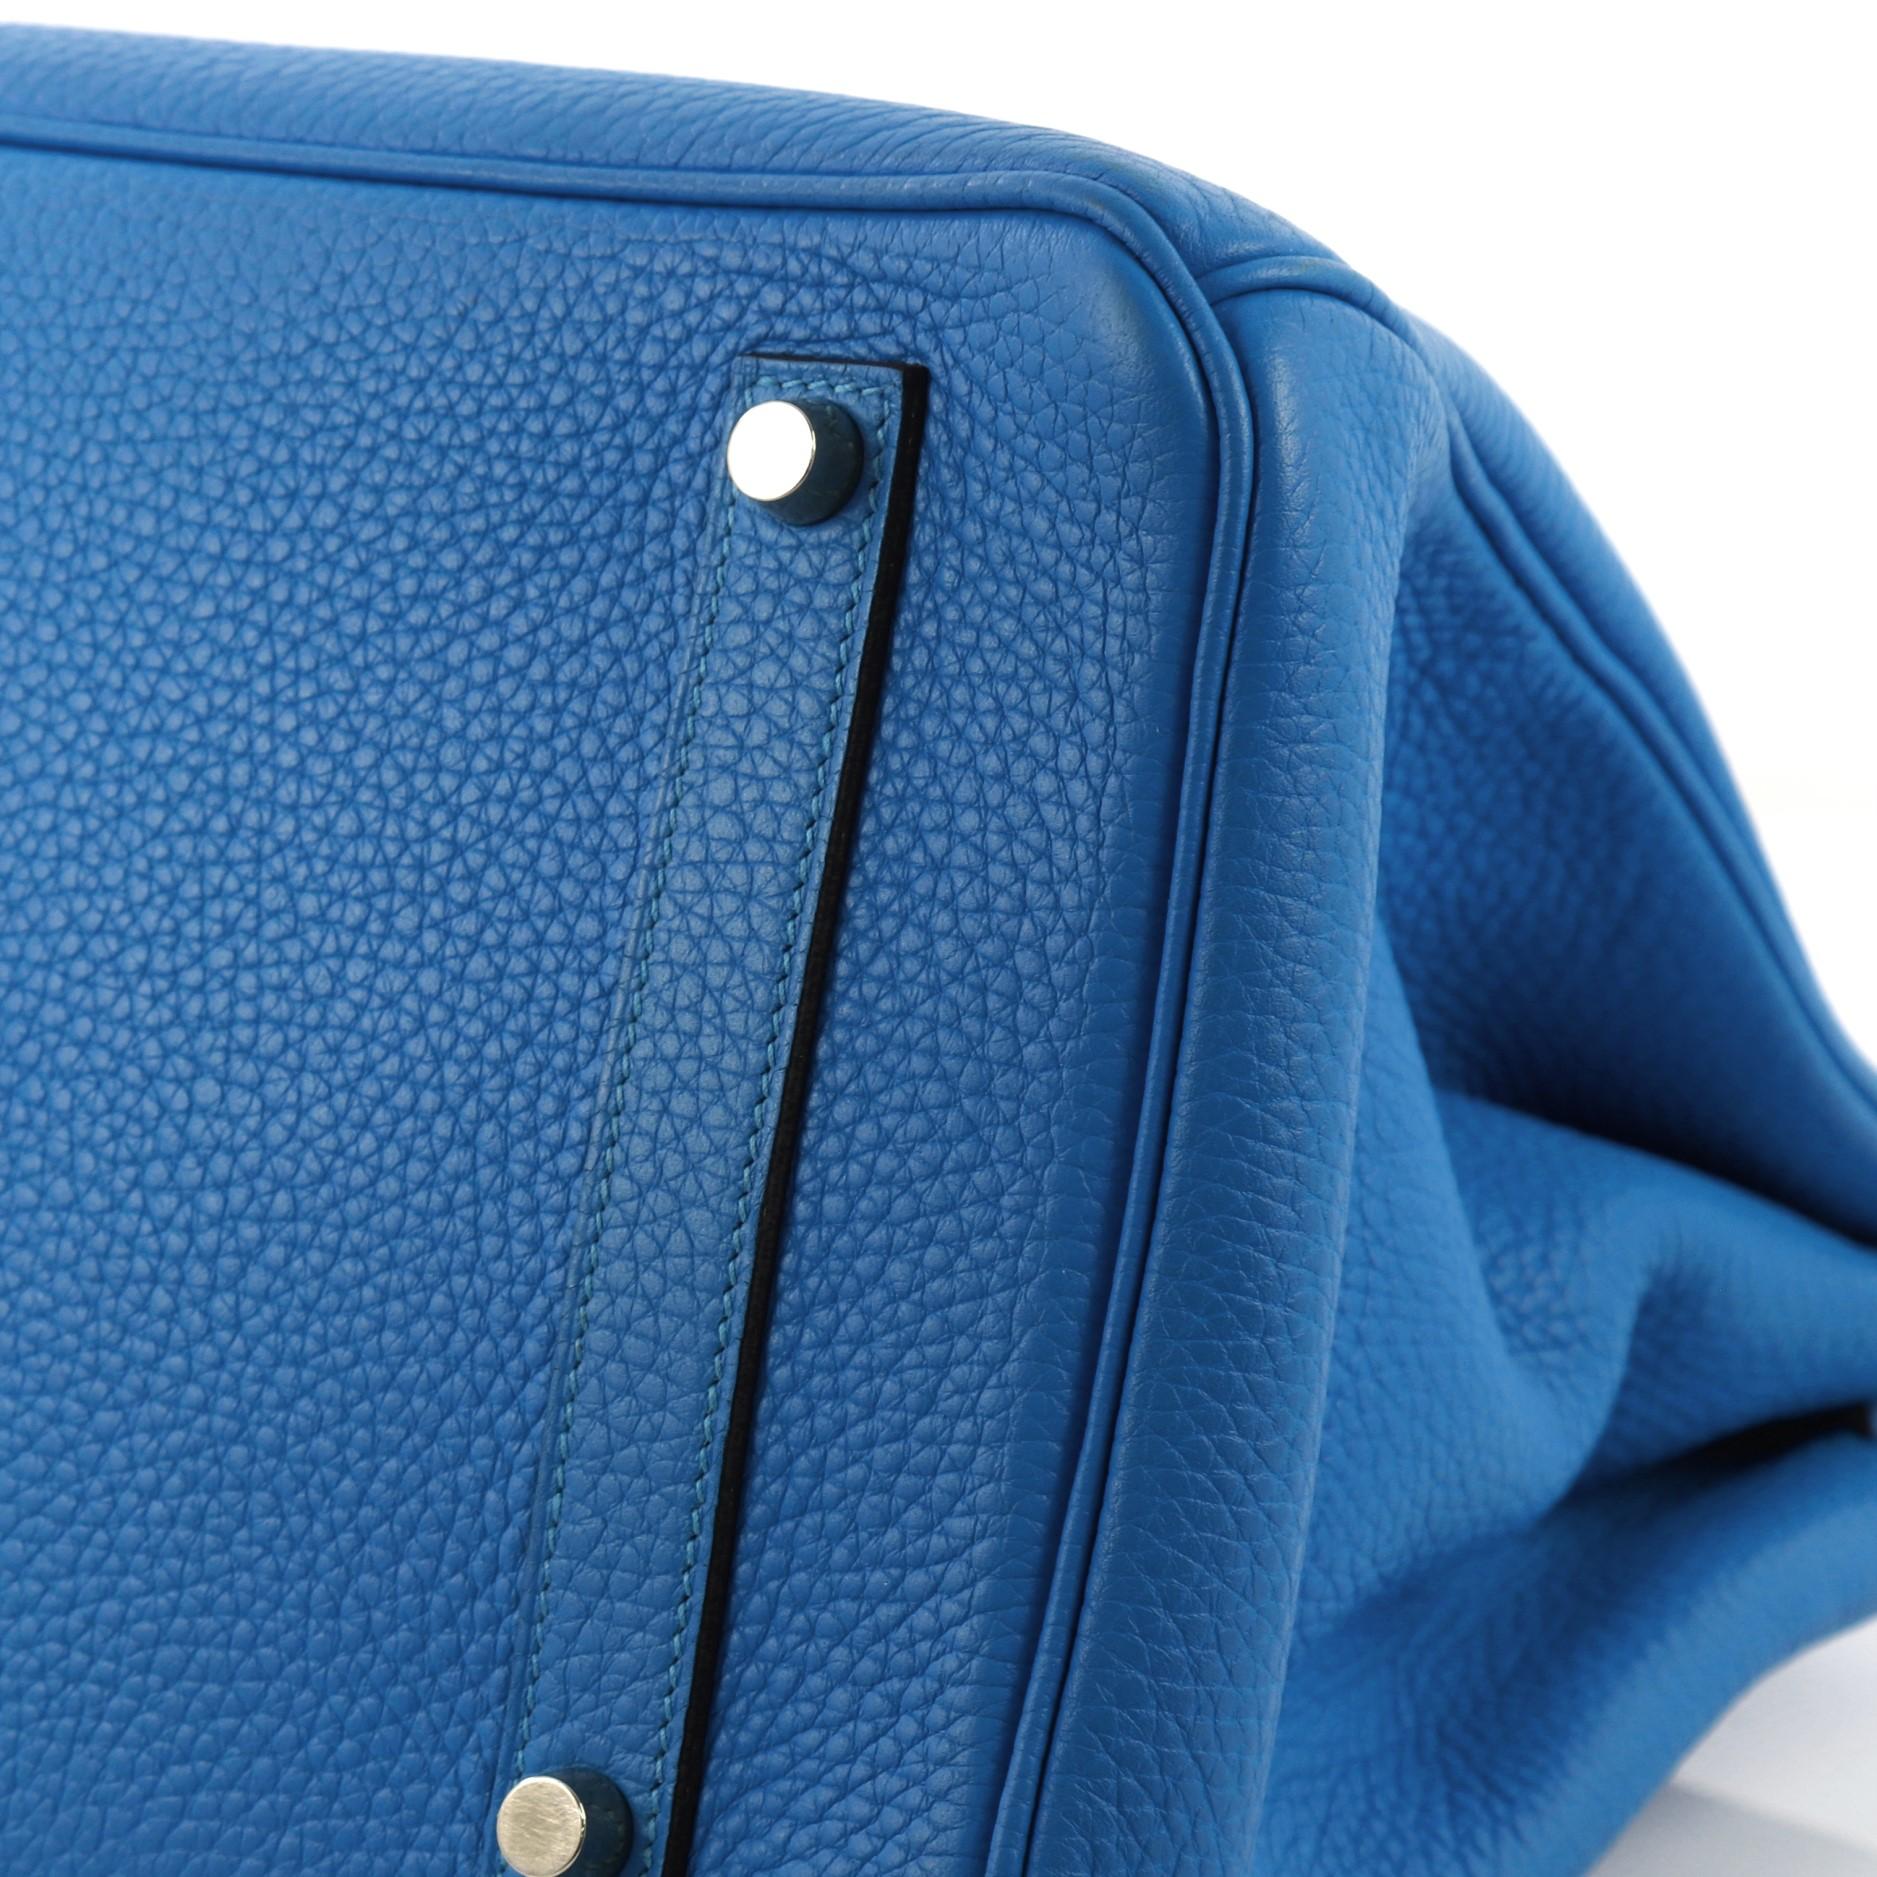 Blue Hermes Birkin Handbag Bleu Hydra Clemence with Gold Hardware 35